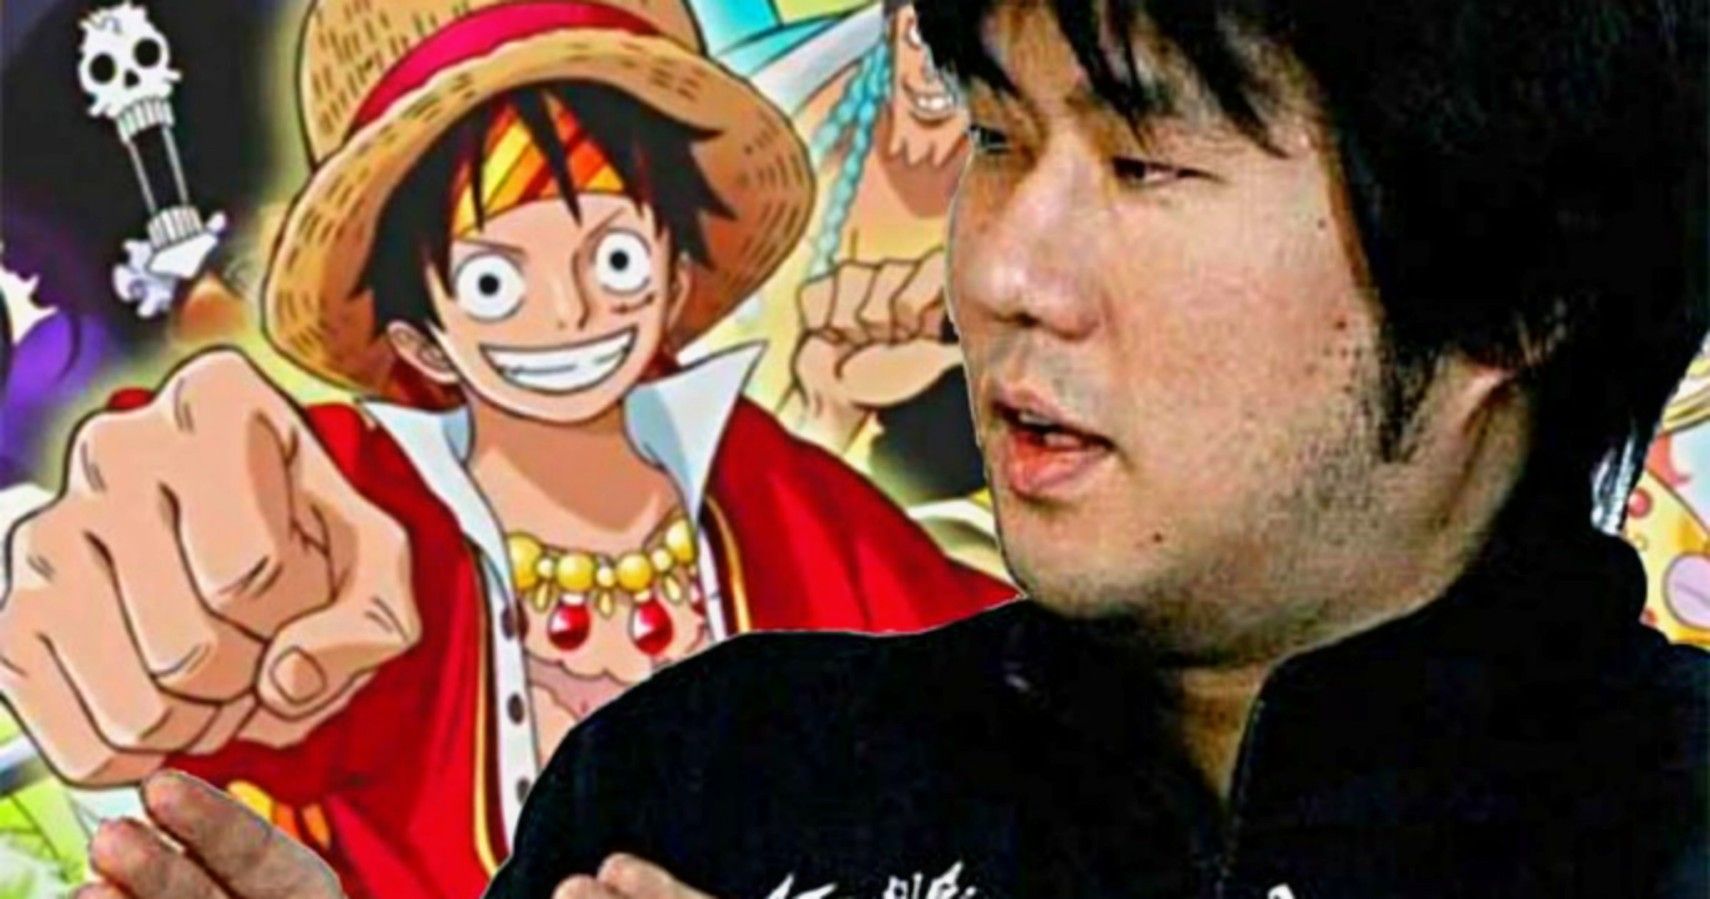 WANTED One Piece short stories by Eiichiro Oda JUMP Comics